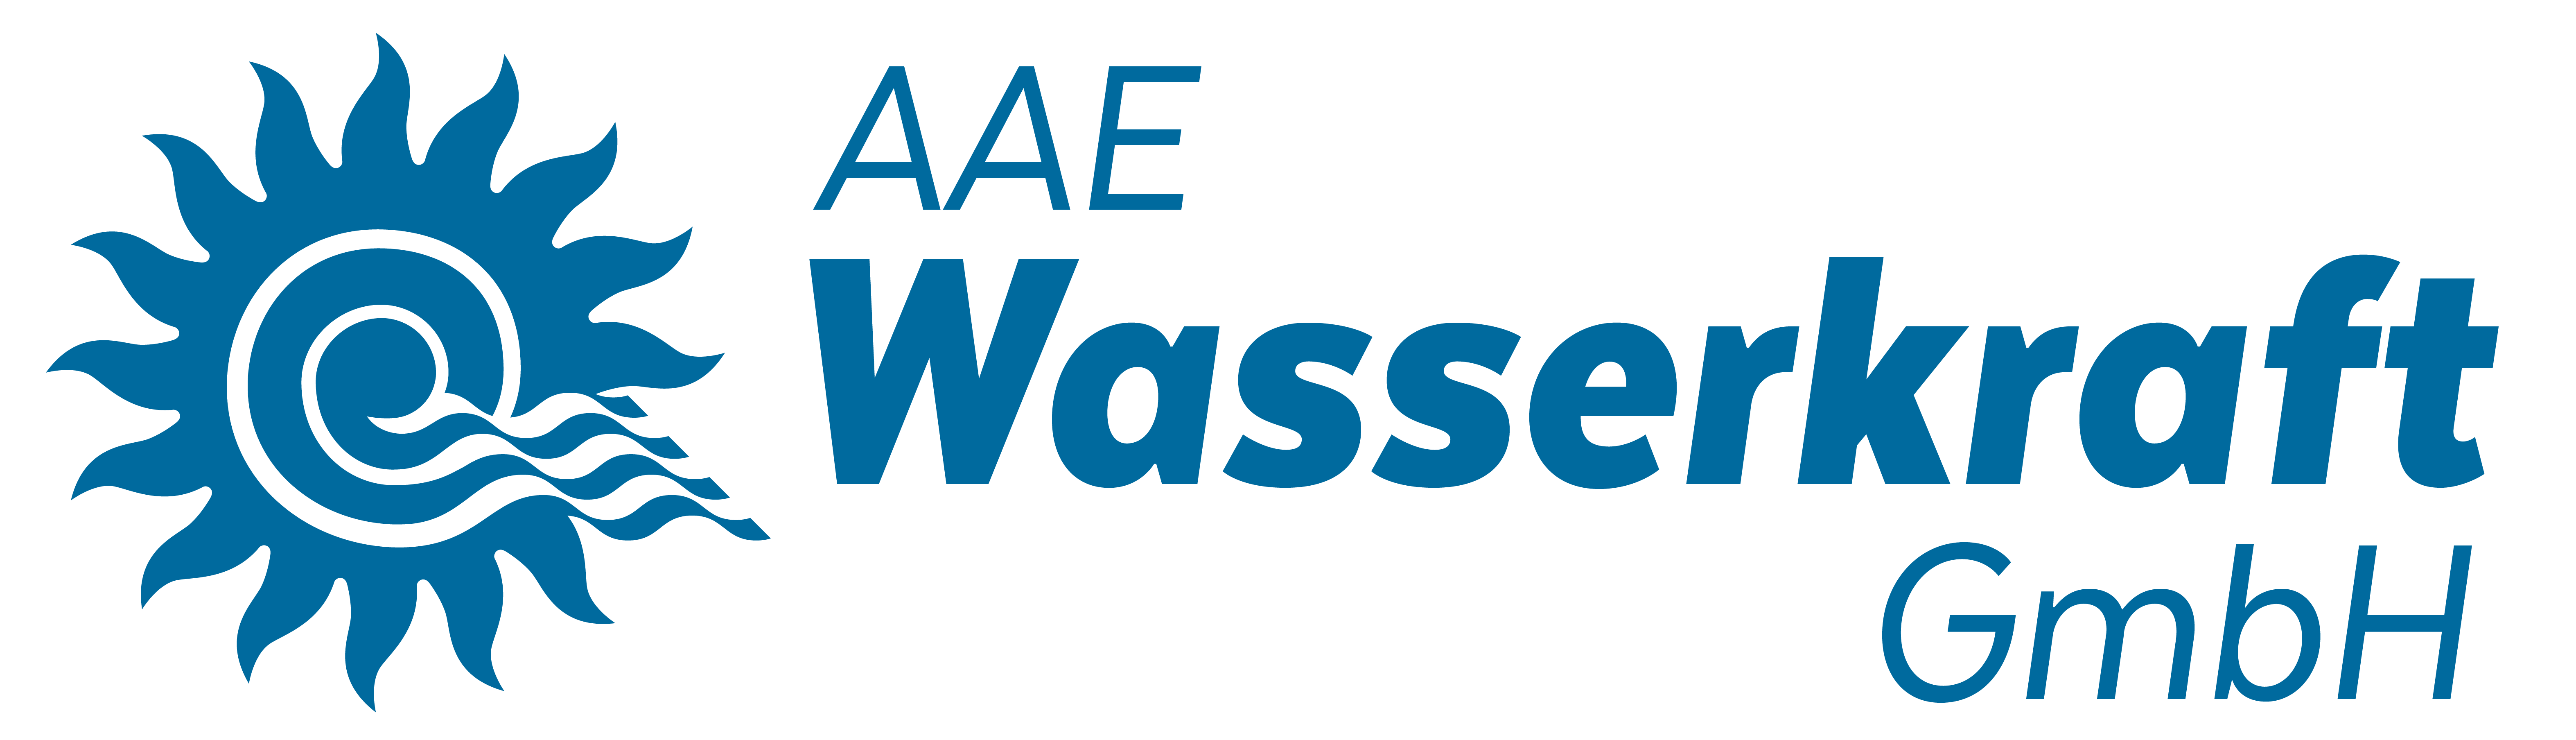 AAE Wasserkraft Logo